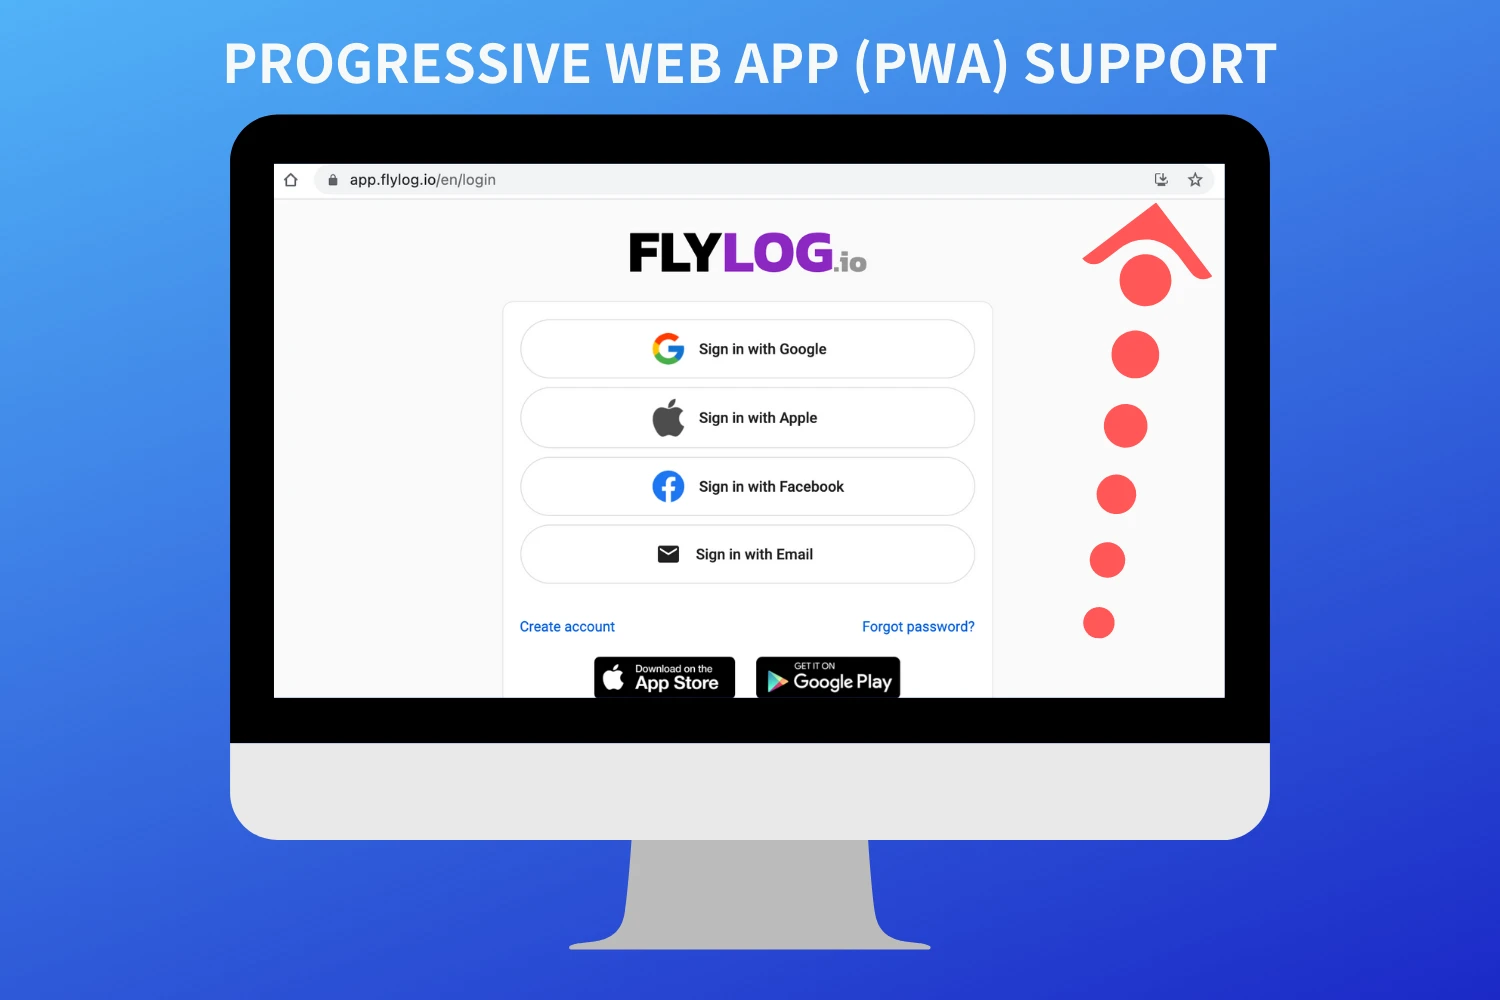 FLYLOG as PWA application